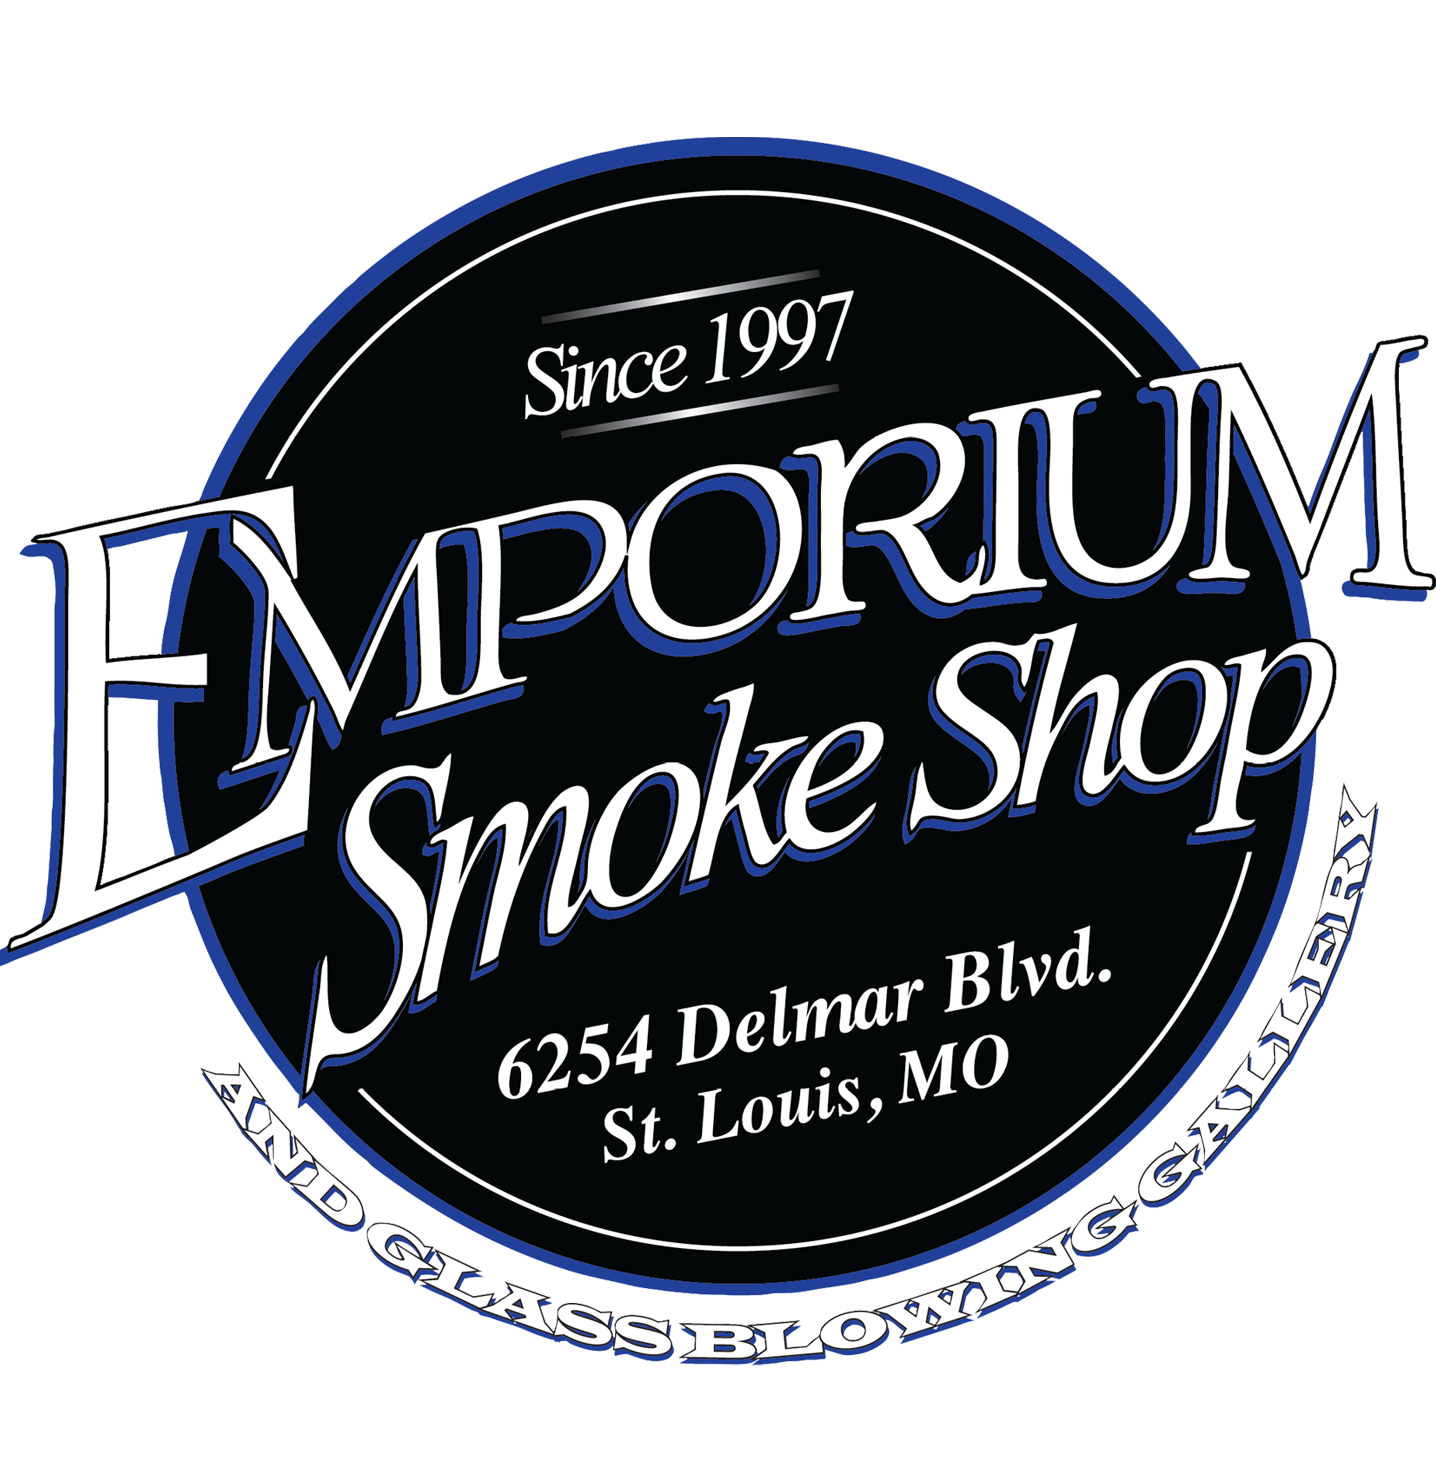 The Emporium Smoke Shop - Loop 420 Fest Sponsor